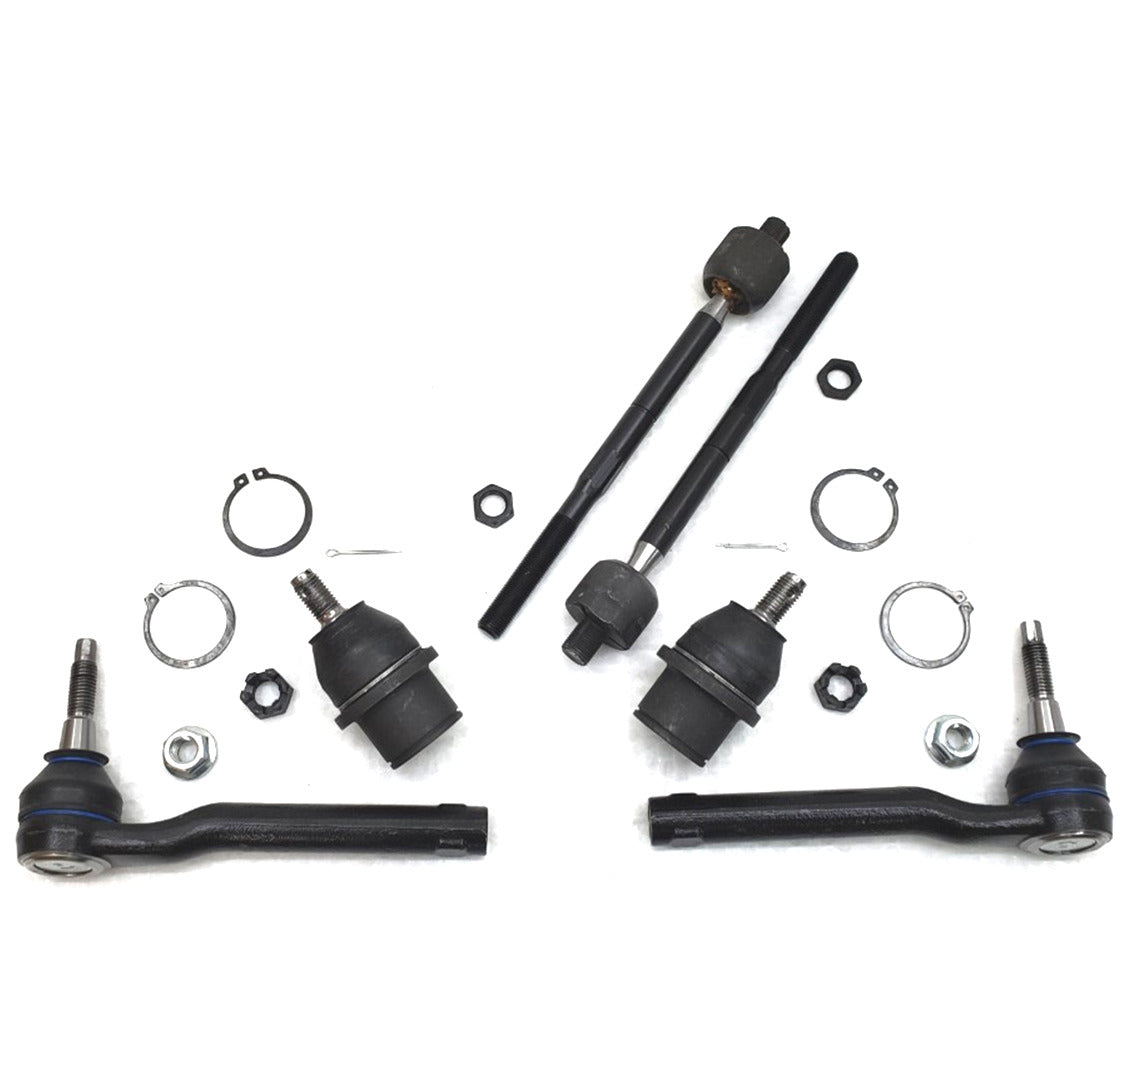 HD Lower Ball Joints Tie Rod Steering Kit for 2010-2014 Ford F150 SVT Raptor 6.2L V8 4x4